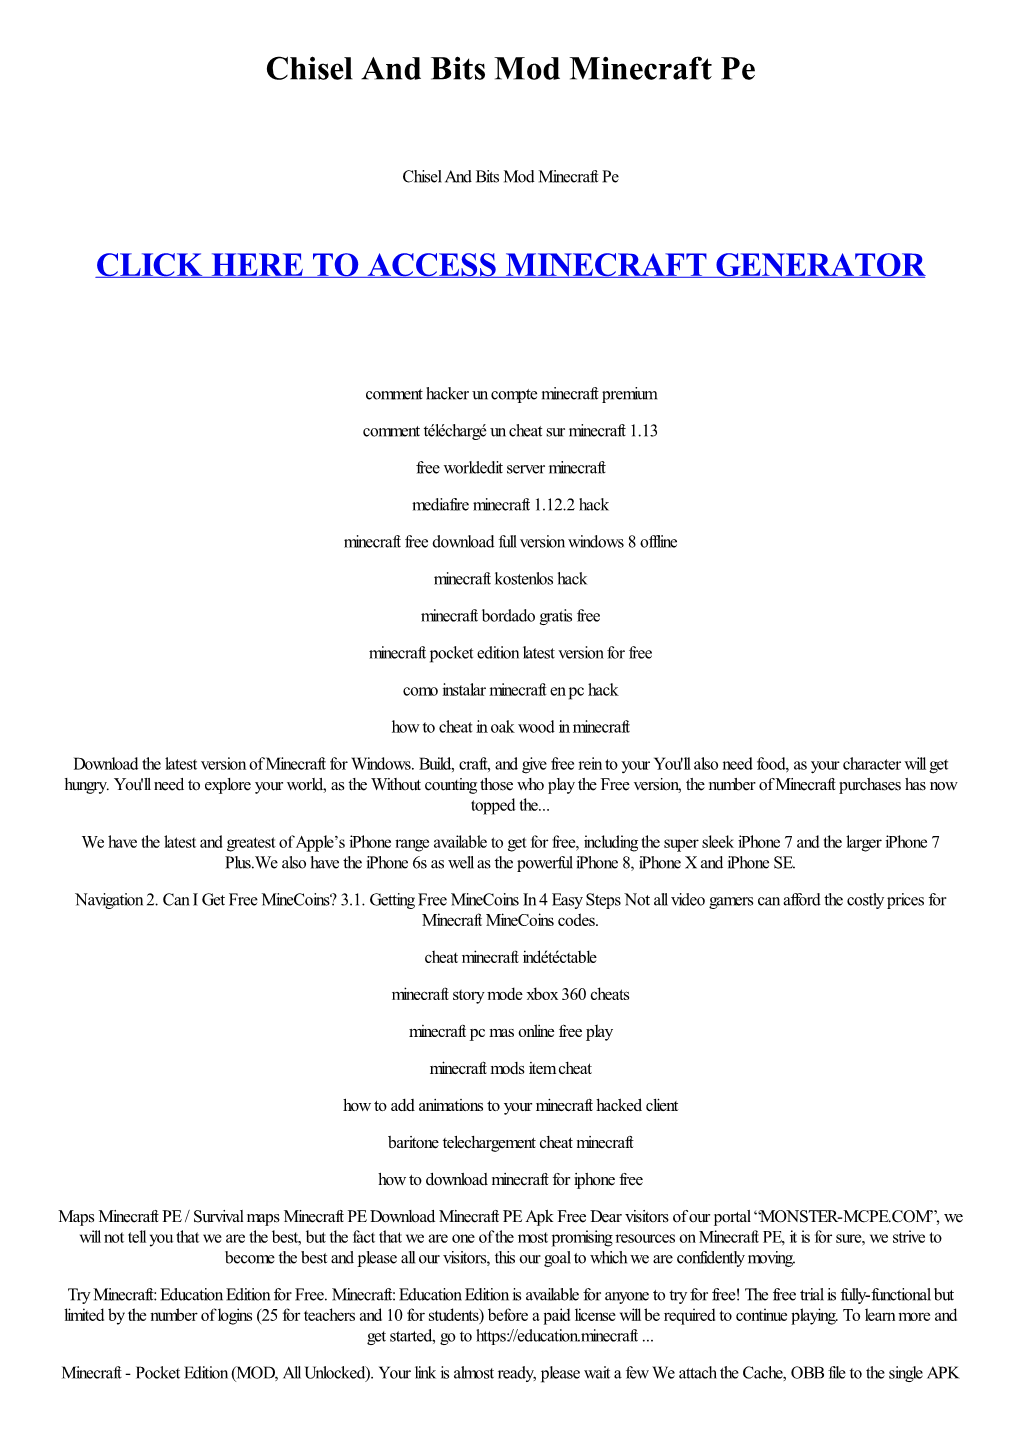 Chisel and Bits Mod Minecraft Pe